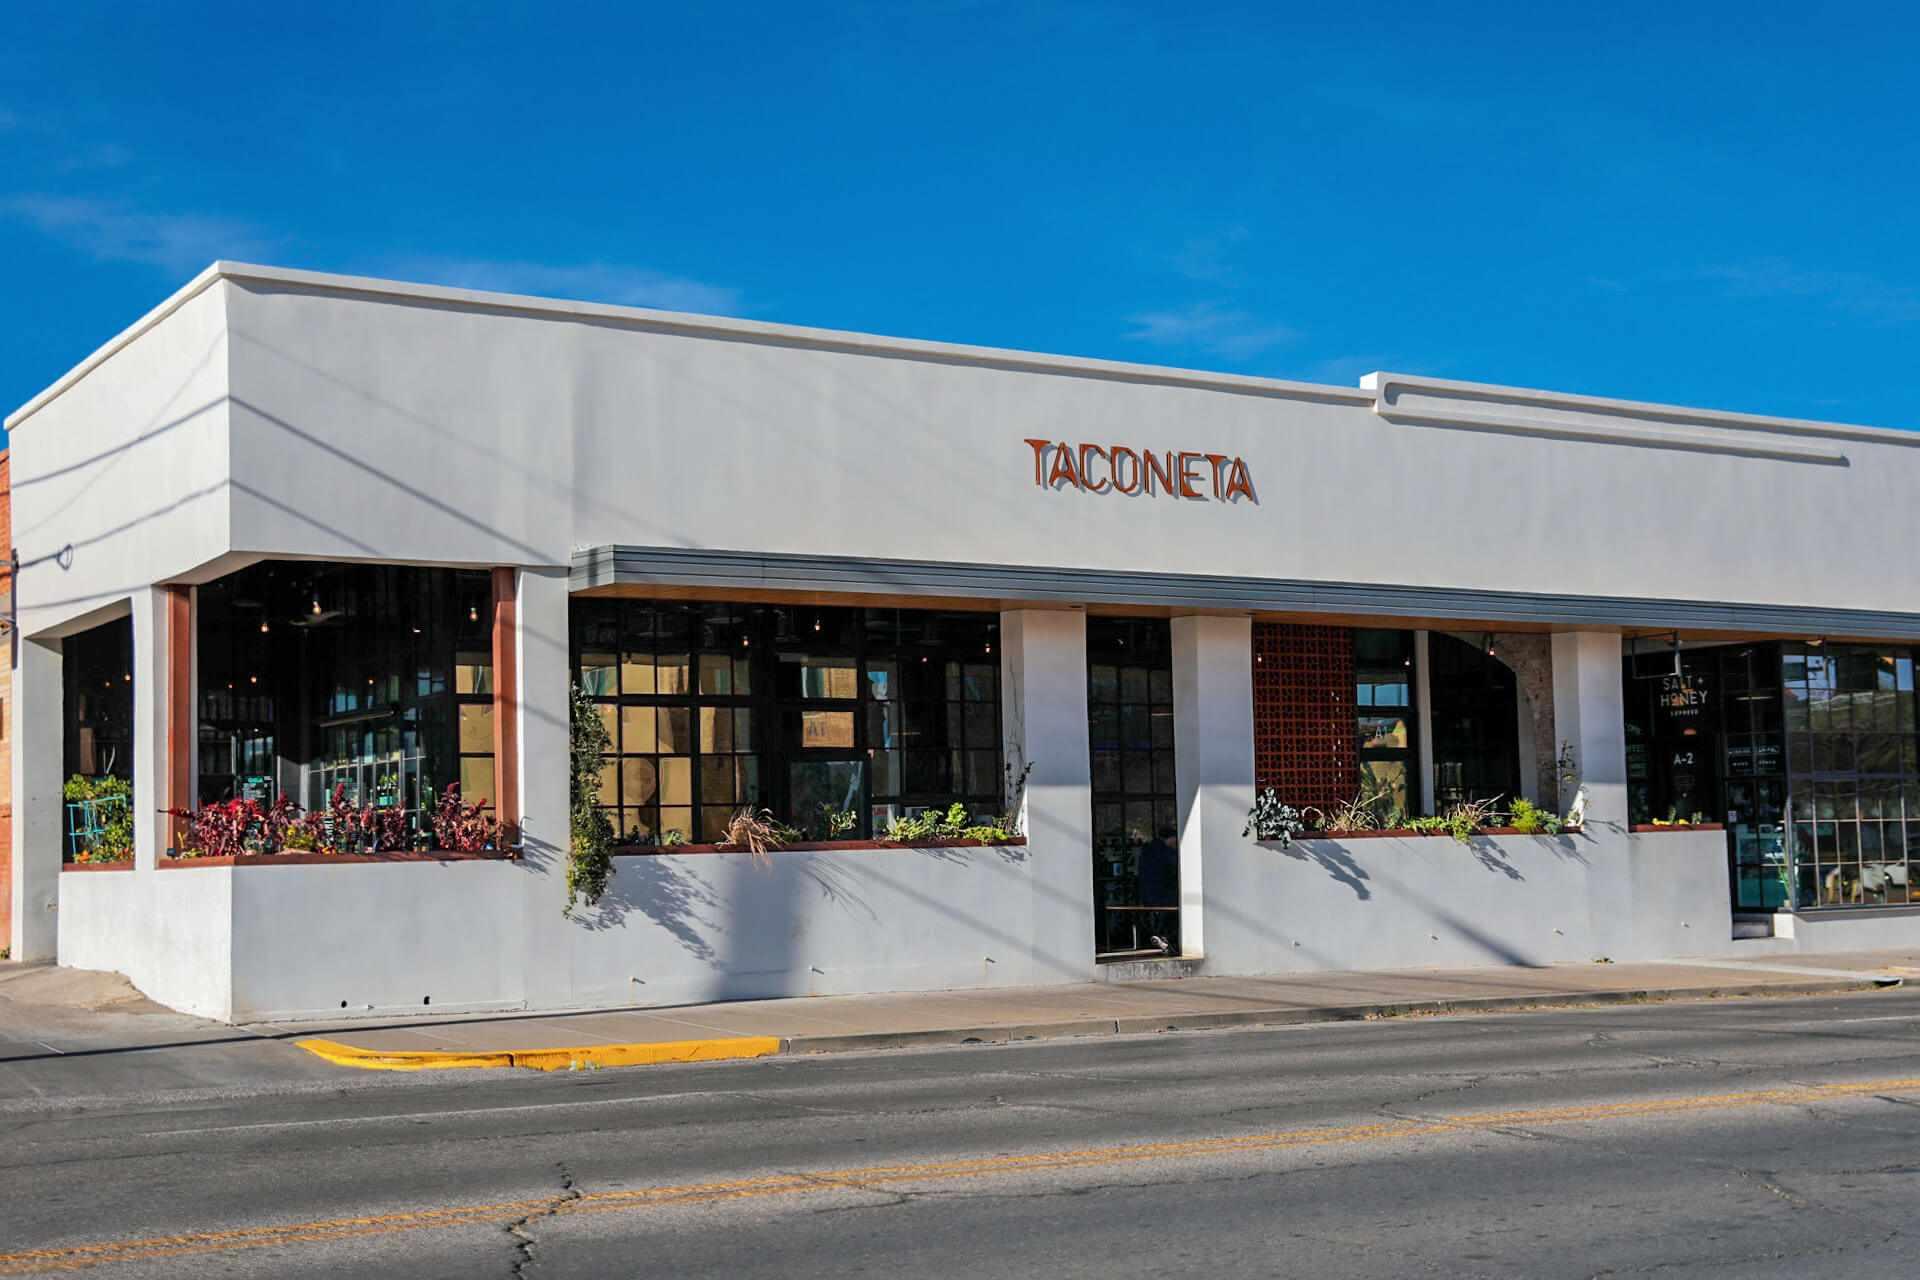 Taconeta Restaurant pic